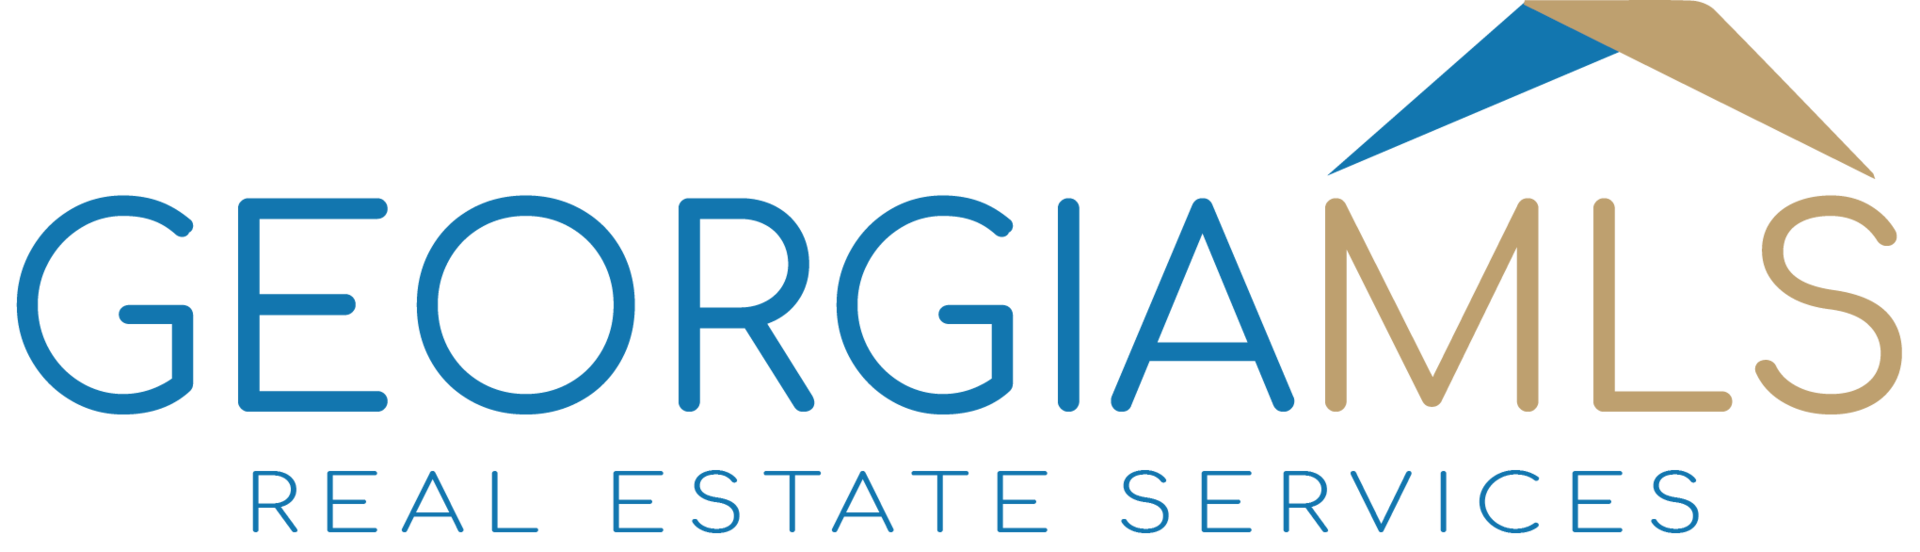 Georgia MLS Real Estate Services